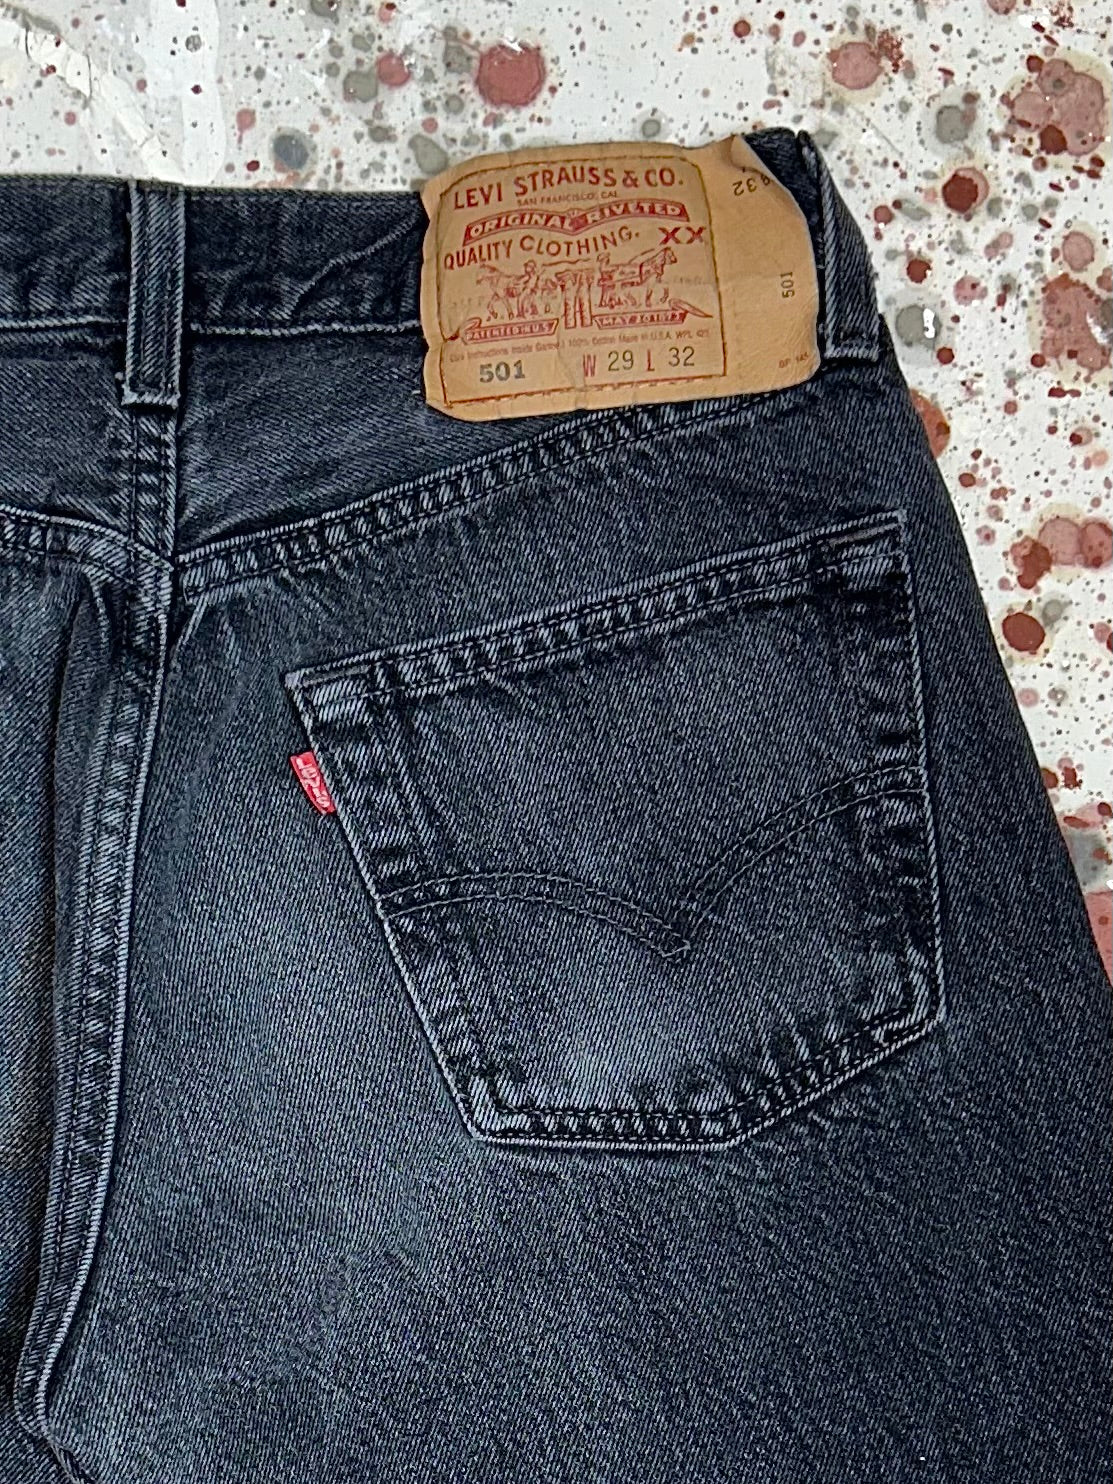 Vintage USA Black Levi's 501 Denim Jeans (JYJ0224-084)